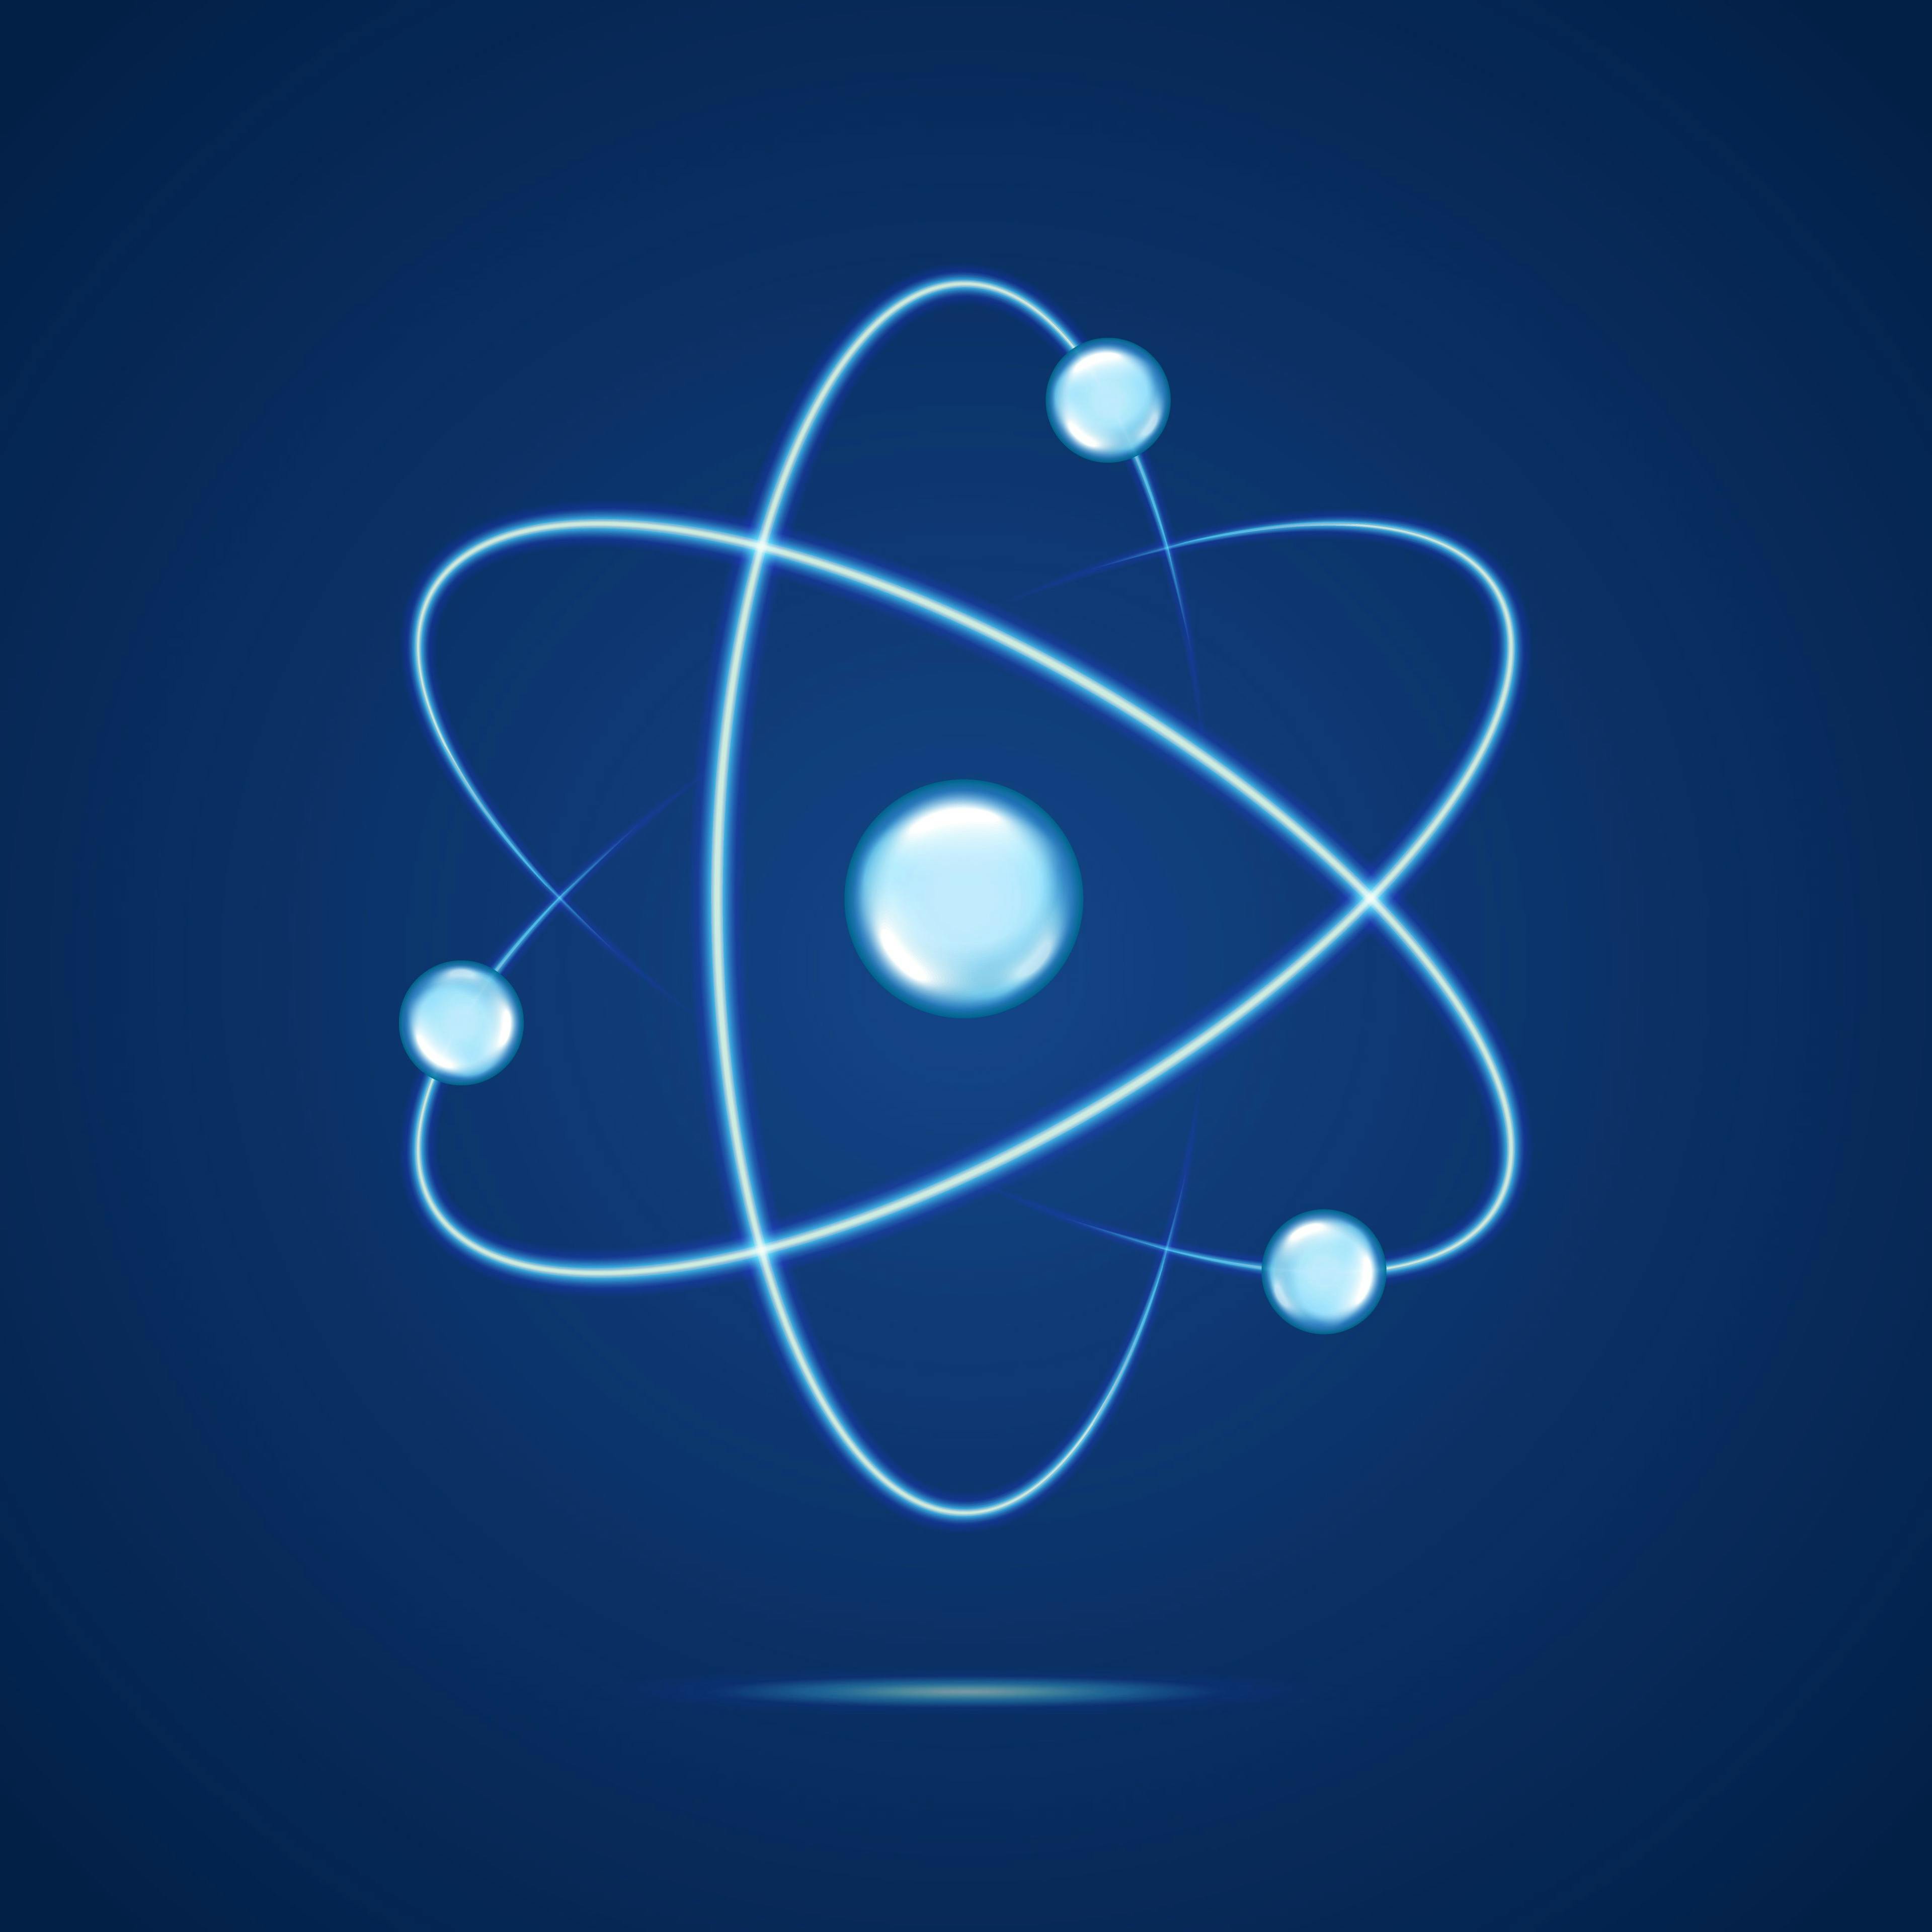 Atom icon. Neon light atomic neutron. Atom blue color. Nuclear atom. 3d cell nucleus. Molecule fusion. Orbit spin. Proton core symbol. Ion element. Science physics. Energy core. Vector illustration | Image Credit: © Omeris - stock.adobe.com